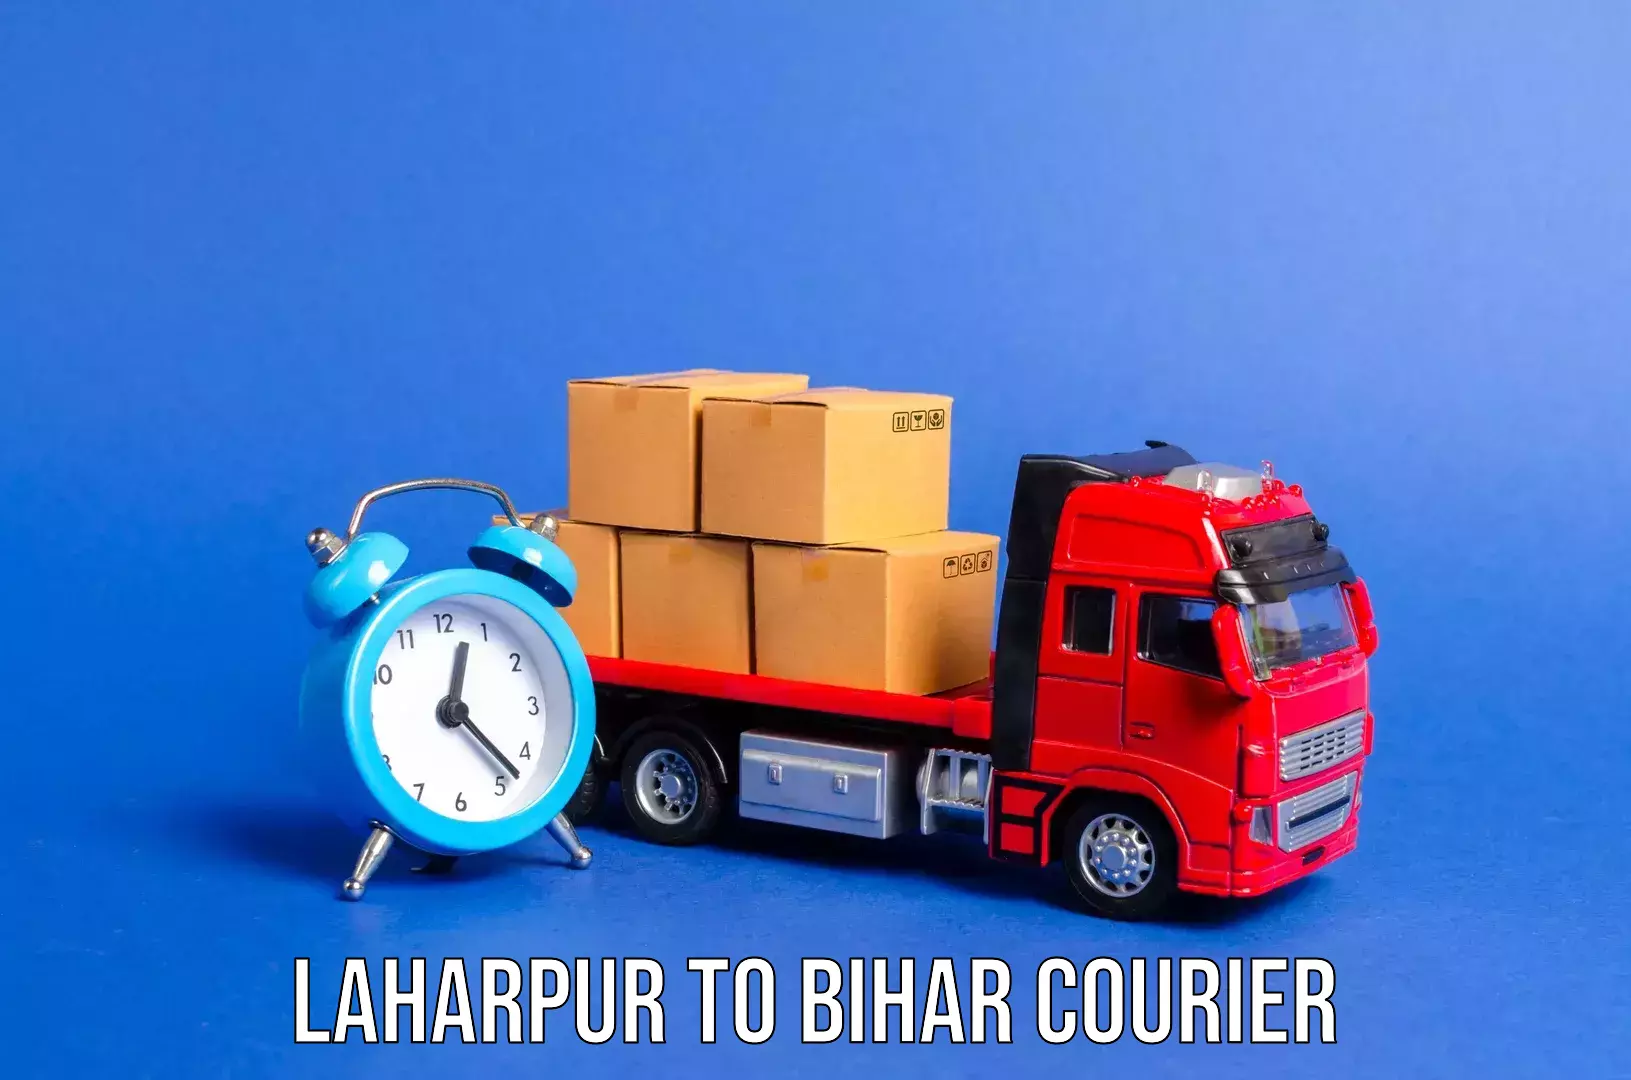 Luggage transport consultancy Laharpur to Bihar